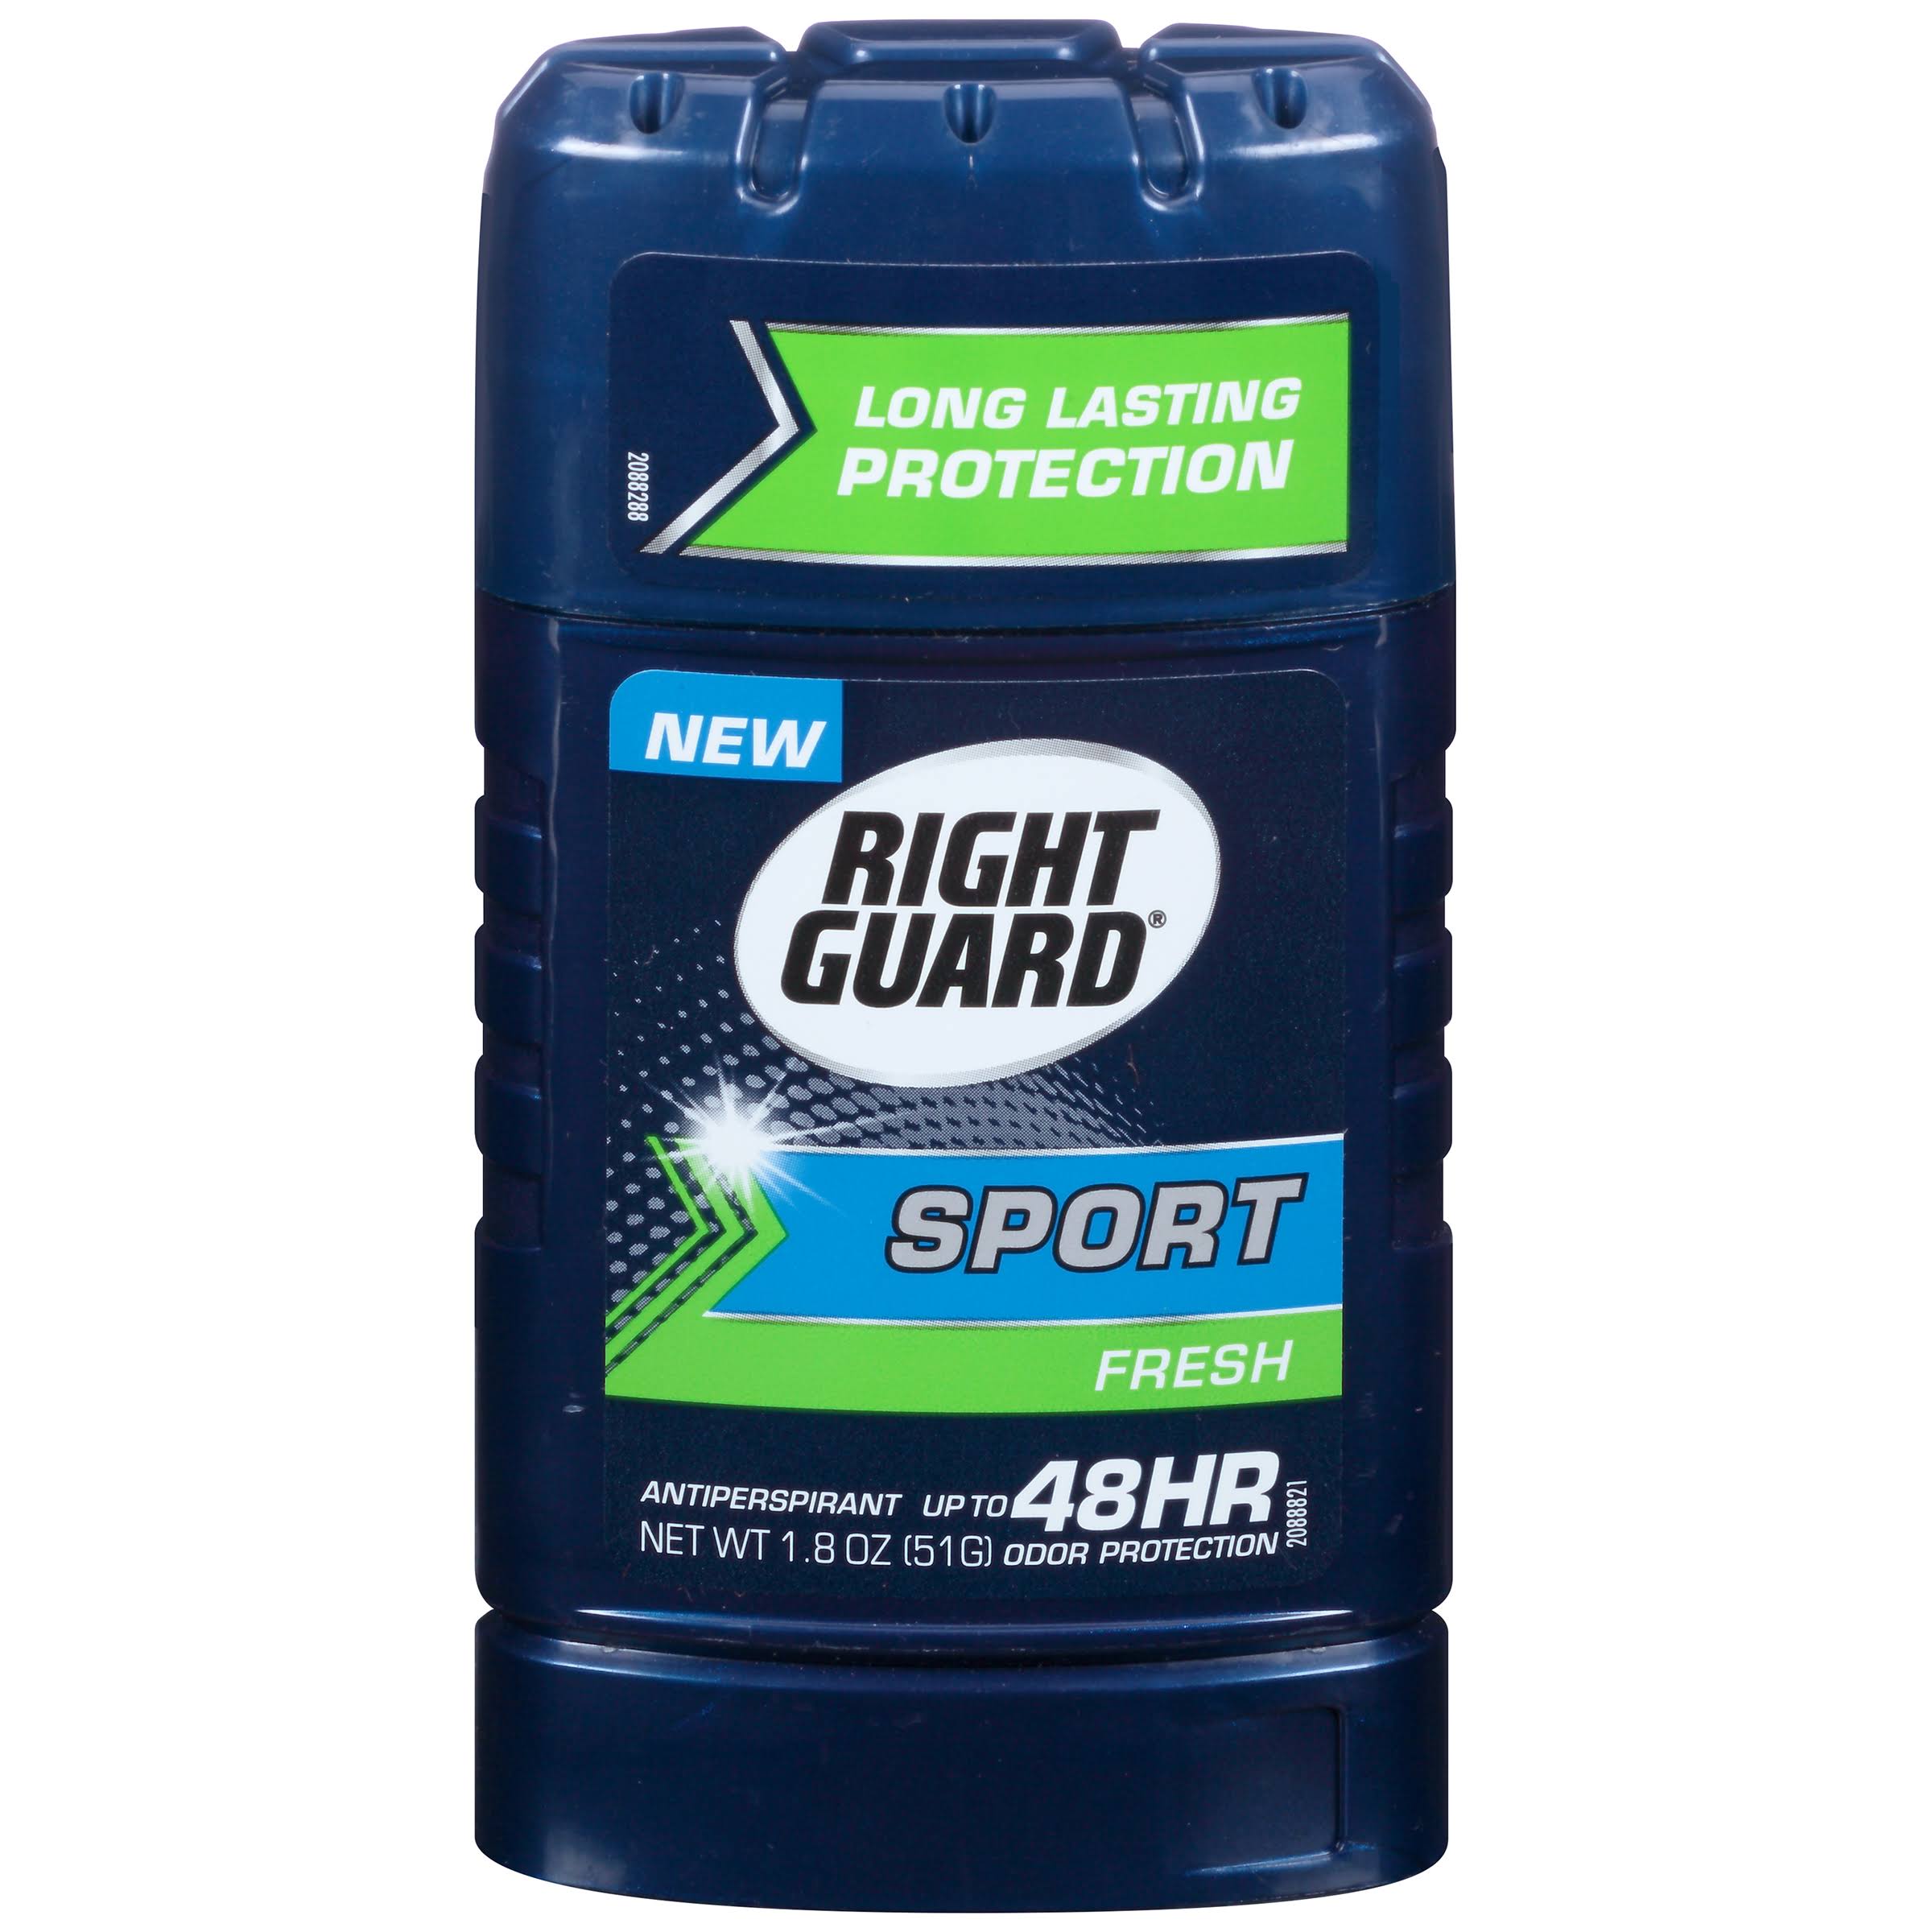 Right Guard Sport Antiperspirant - Fresh, 1.8oz